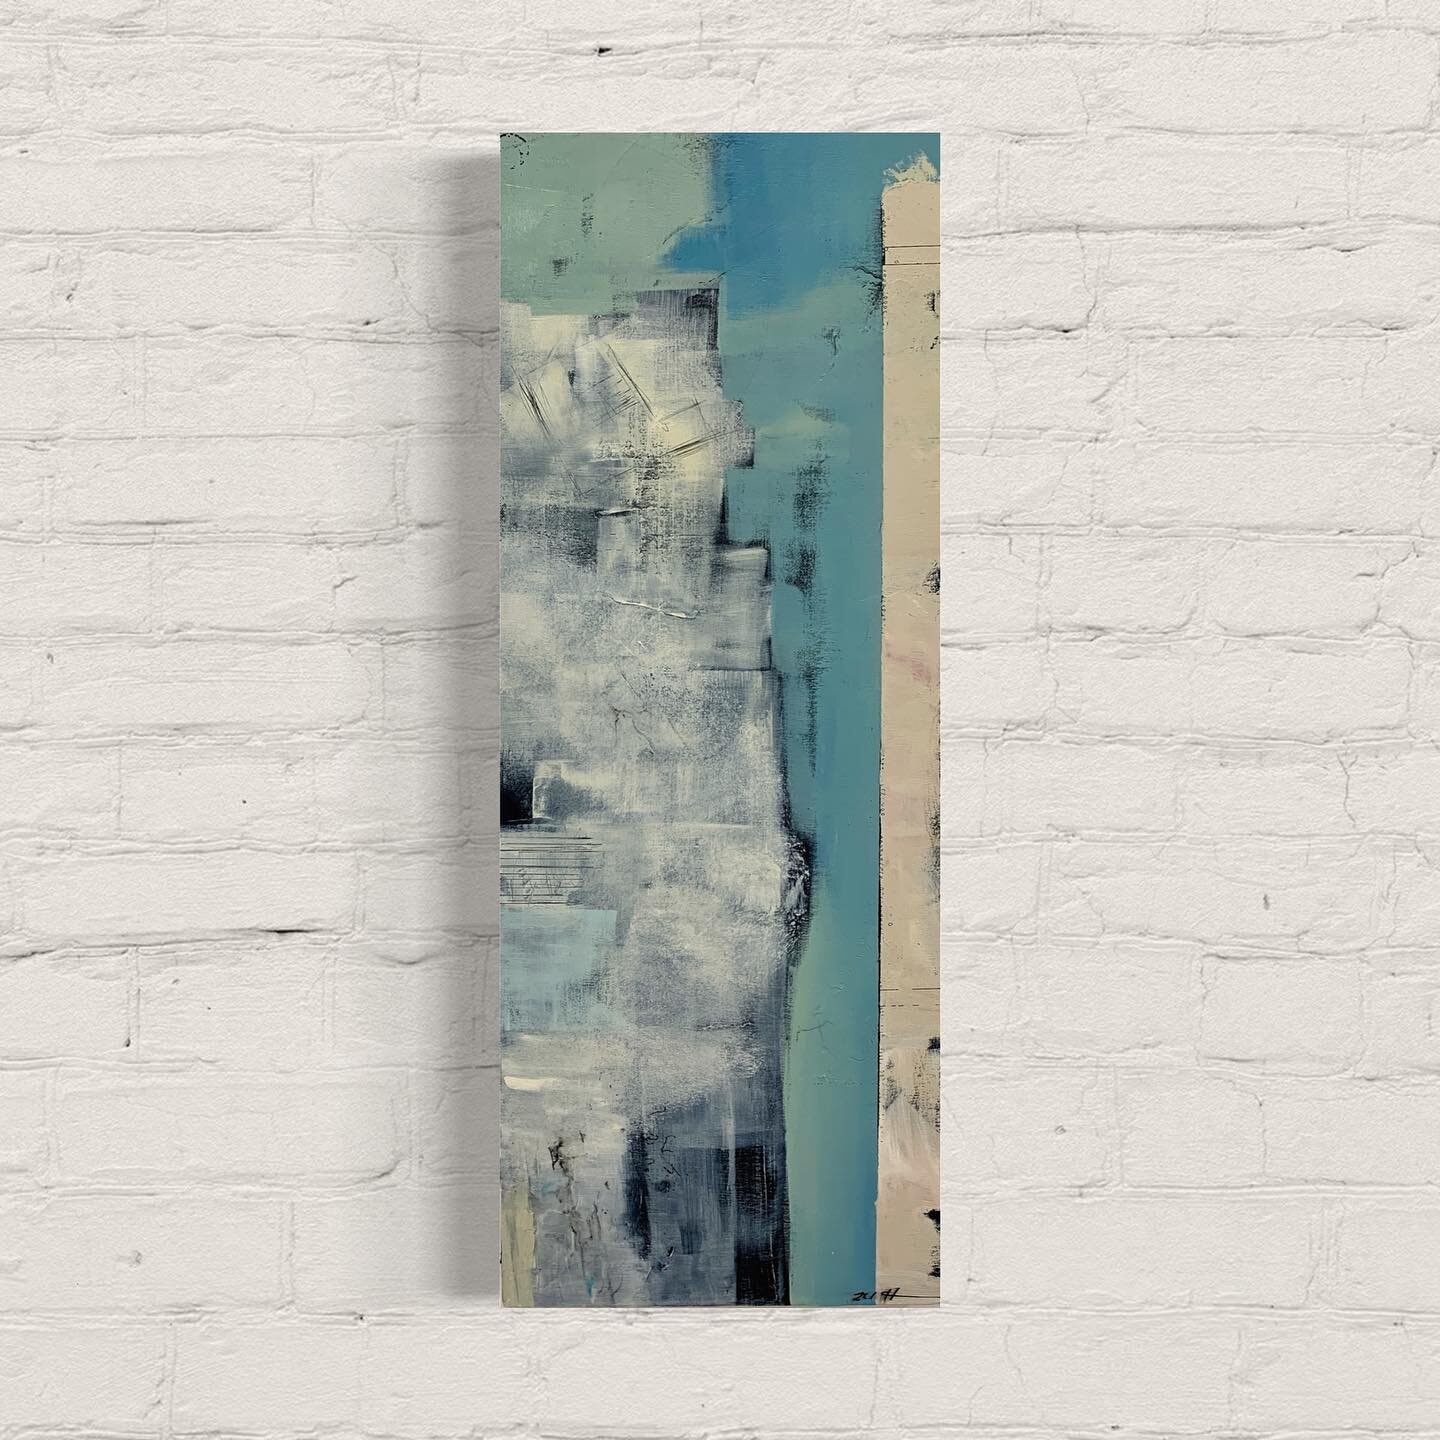 Edge: Acrylic on canvas 
80 x 30cm
#abstractart #instadaily #contemporaryart #britishart #abstractobsession #artlovers #coastalartist #smartistapp #thiscreativelife